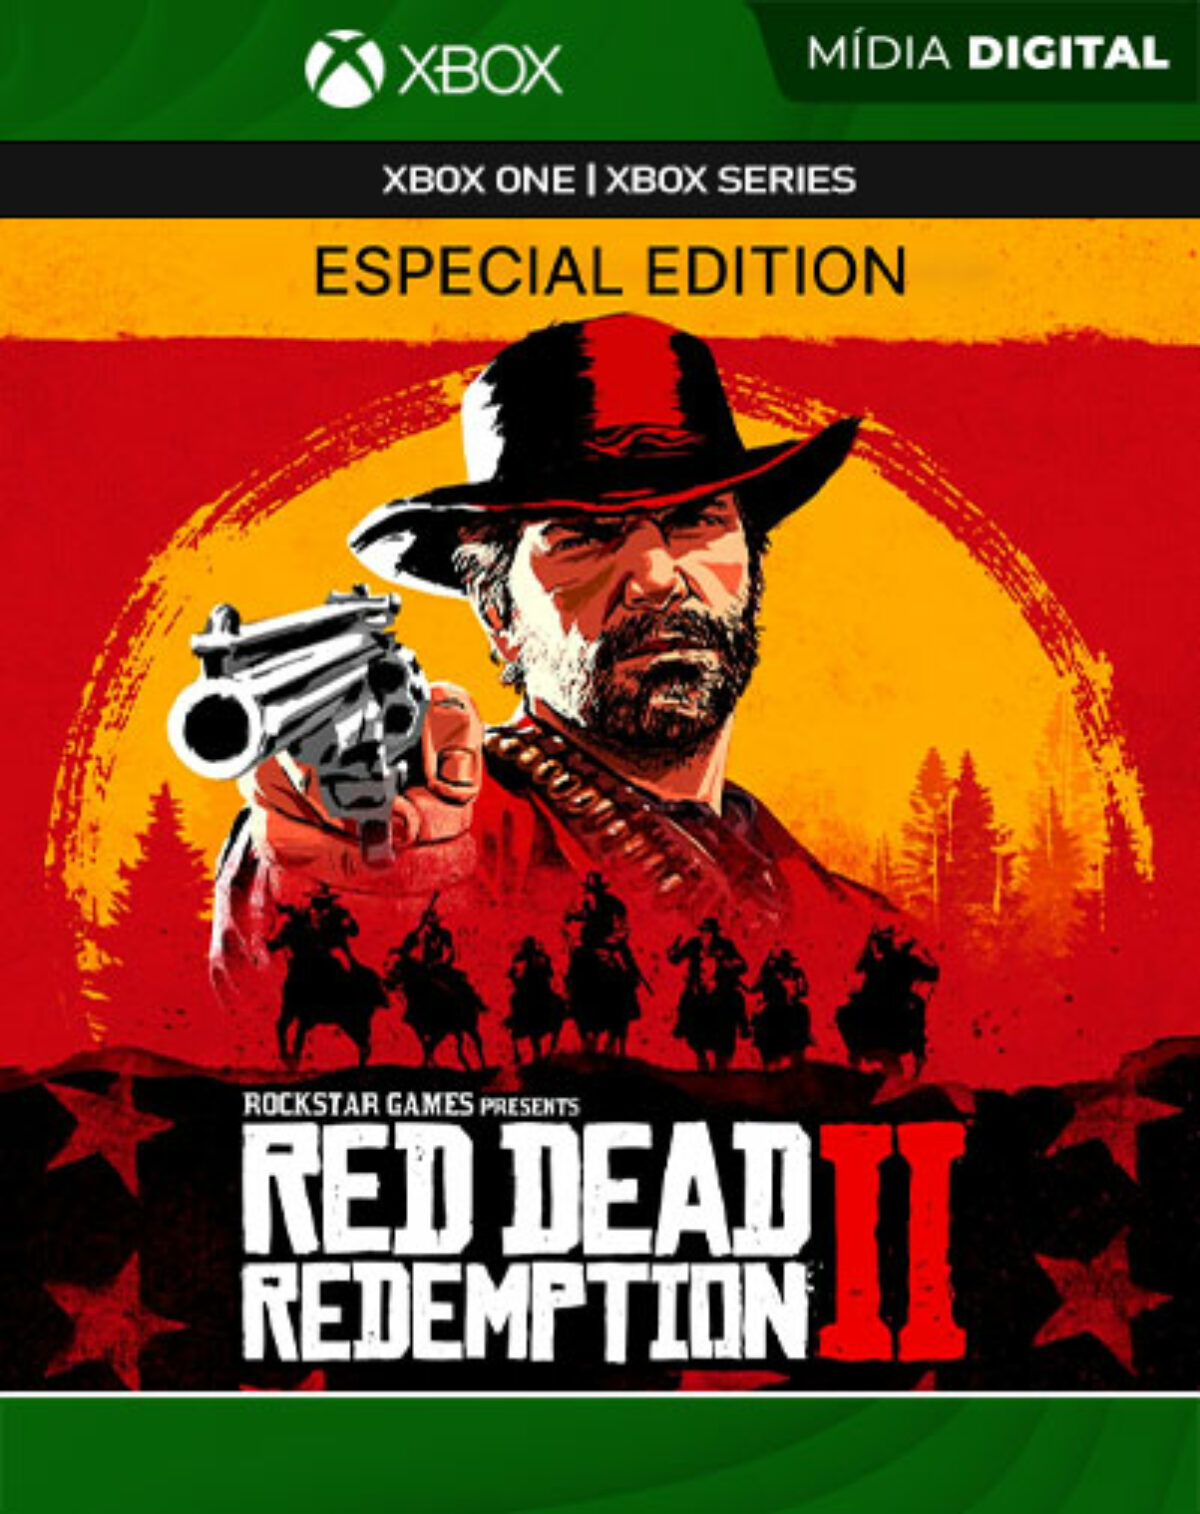 Red Dead Redemption 2 Xbox One - Jogo Mídia Física Lacrado